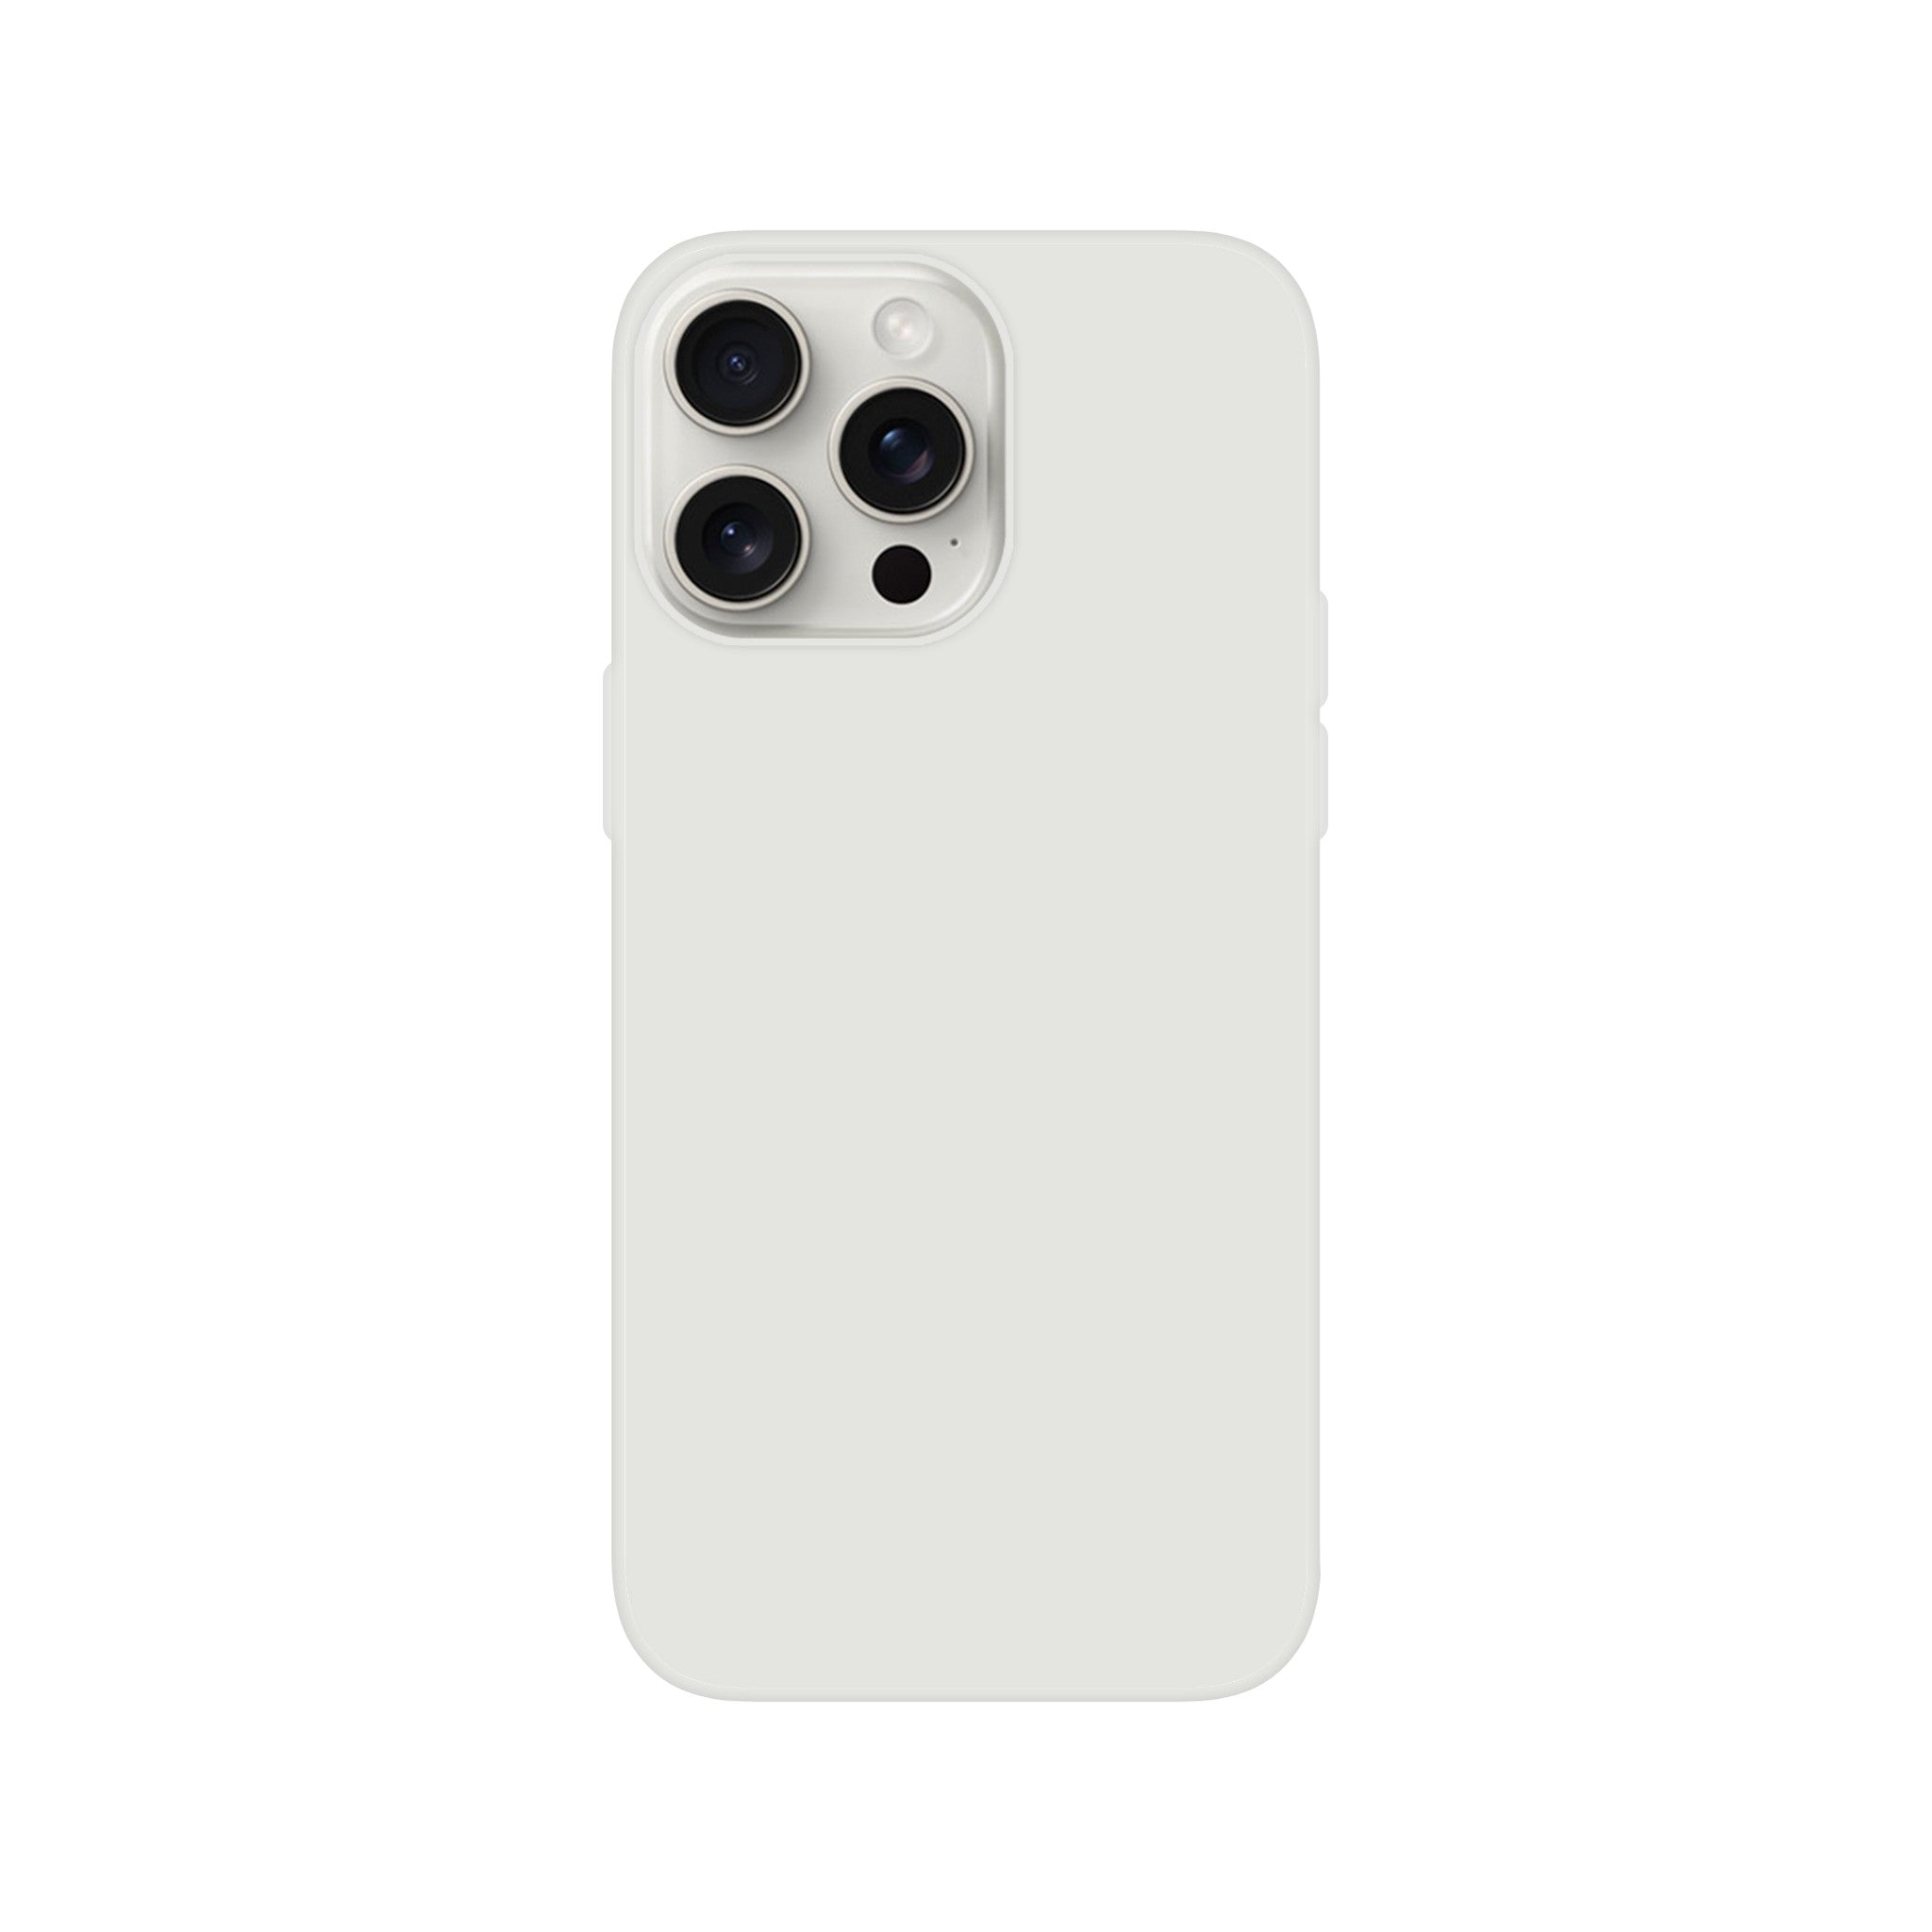 Personalized Flexi Phone Case - Optimalprint